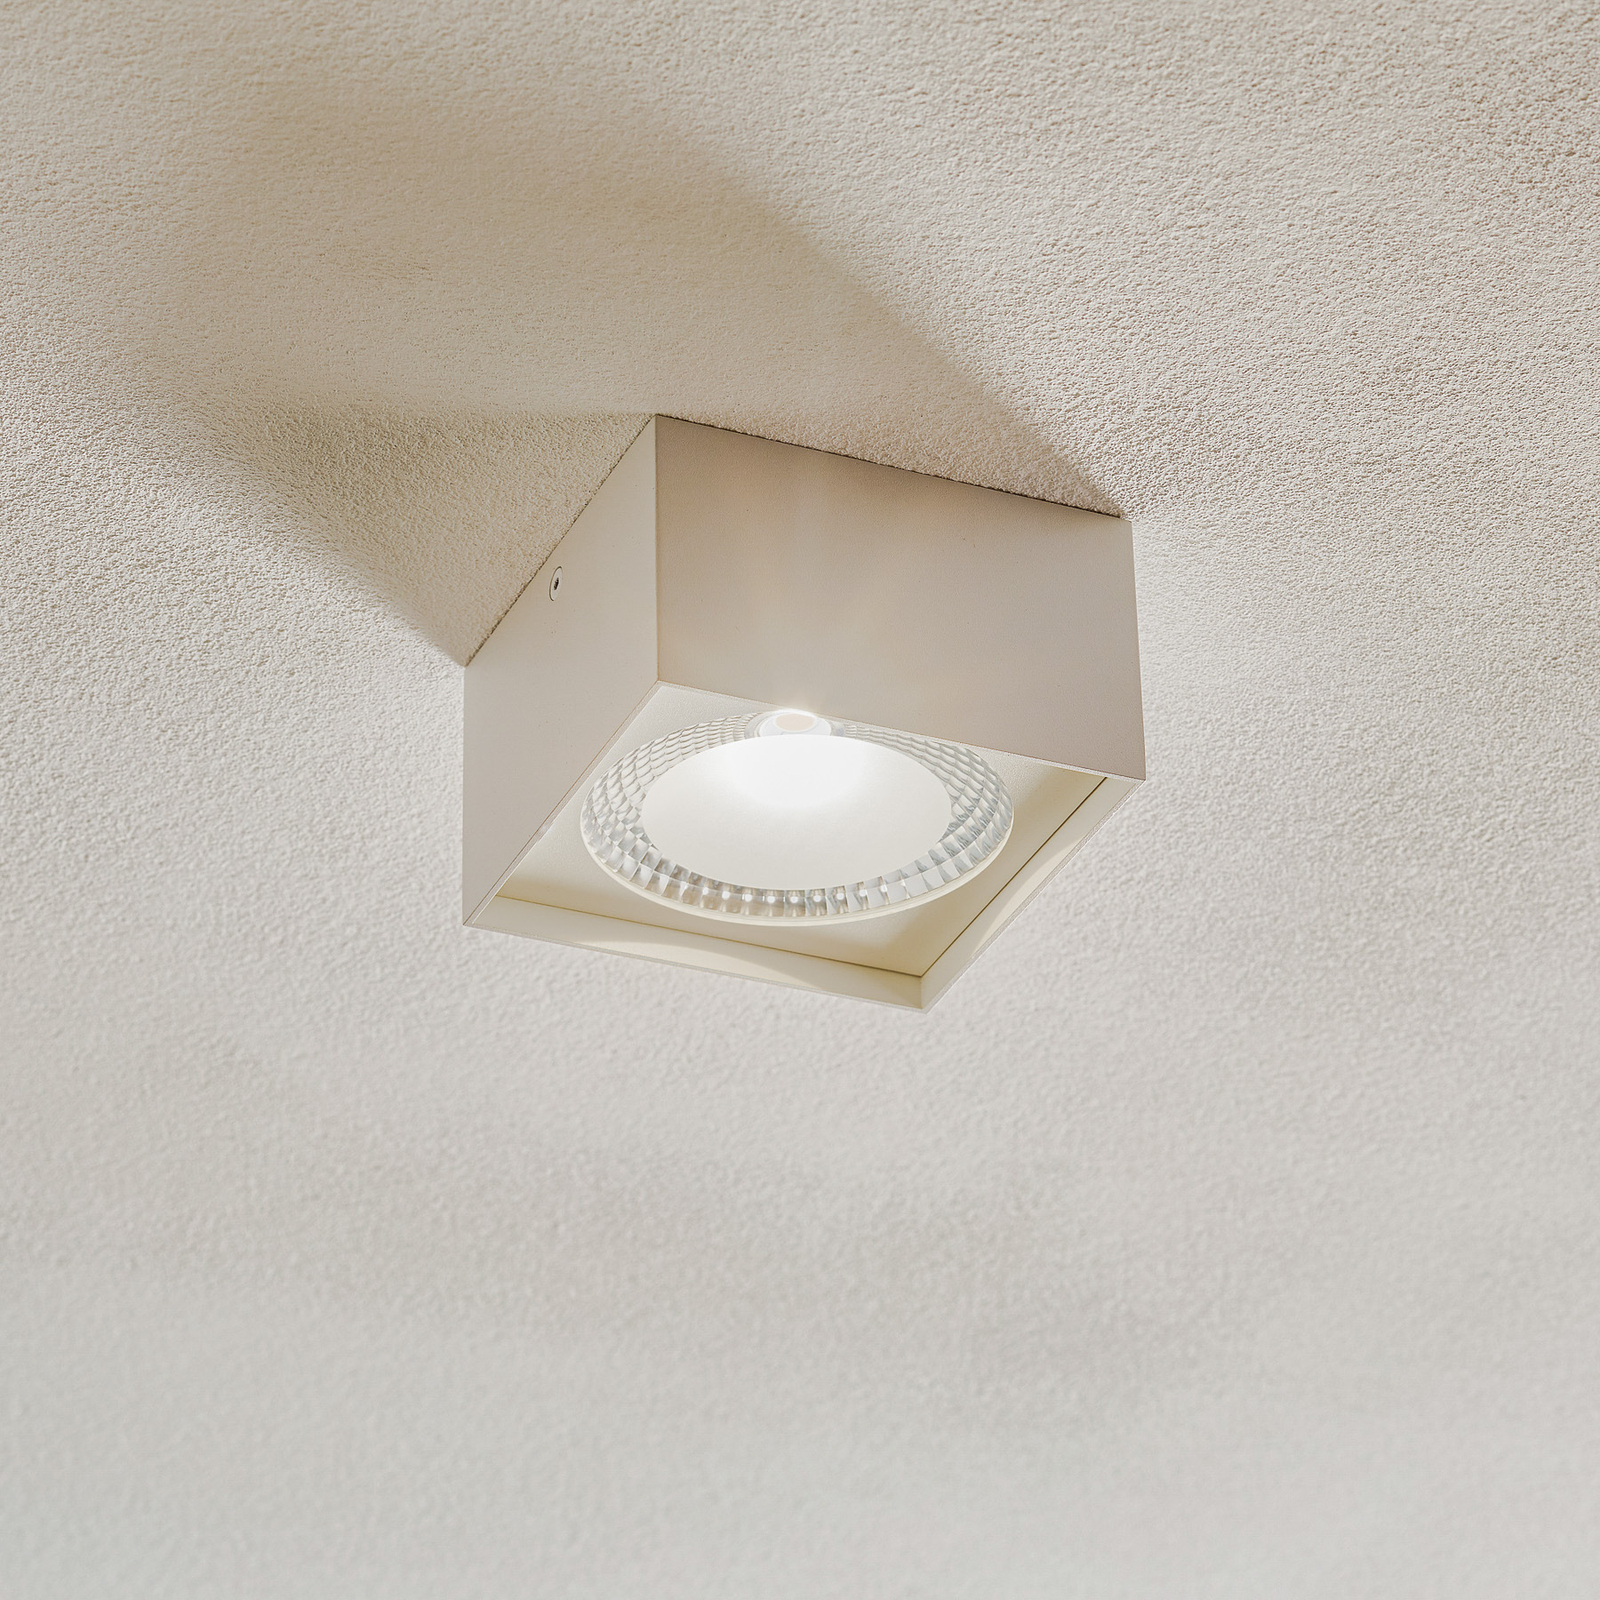 Helestra Kari plafonnier LED, angulaire, blanc